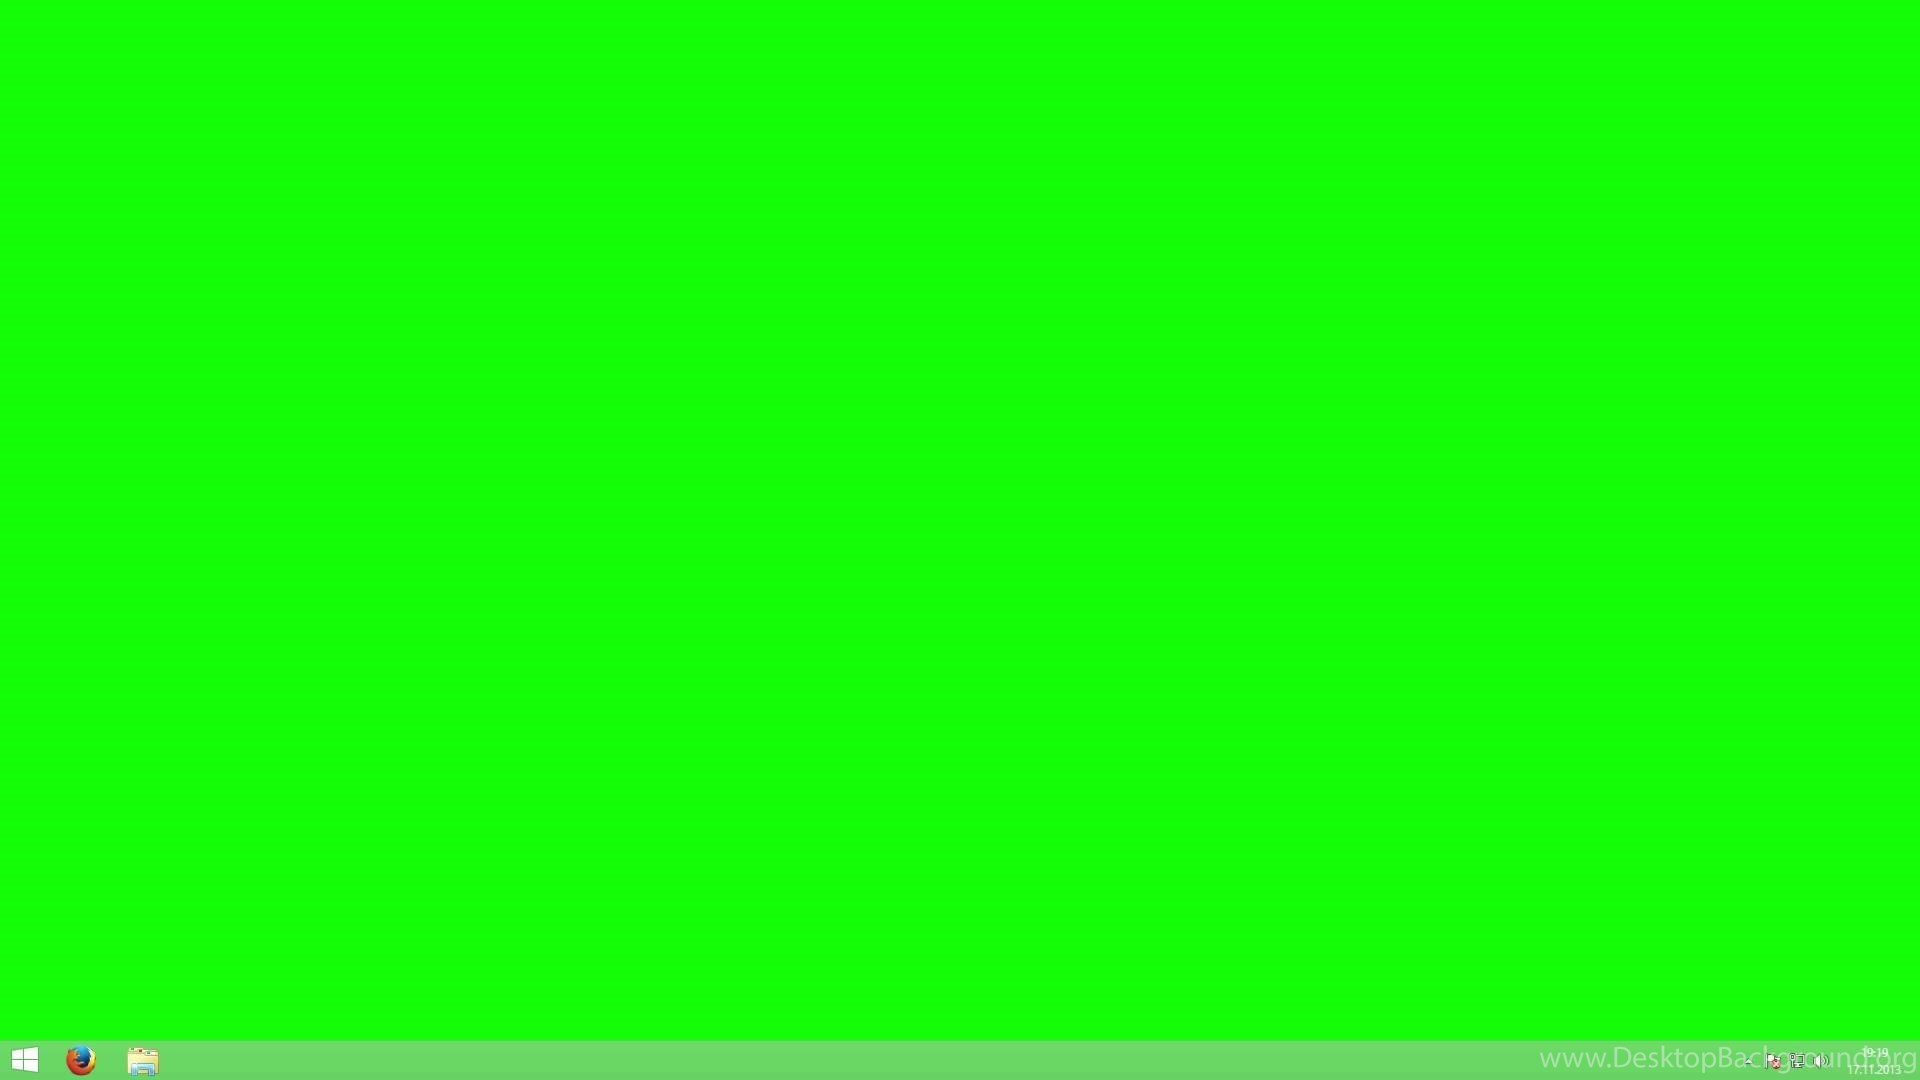 4k green screen footage